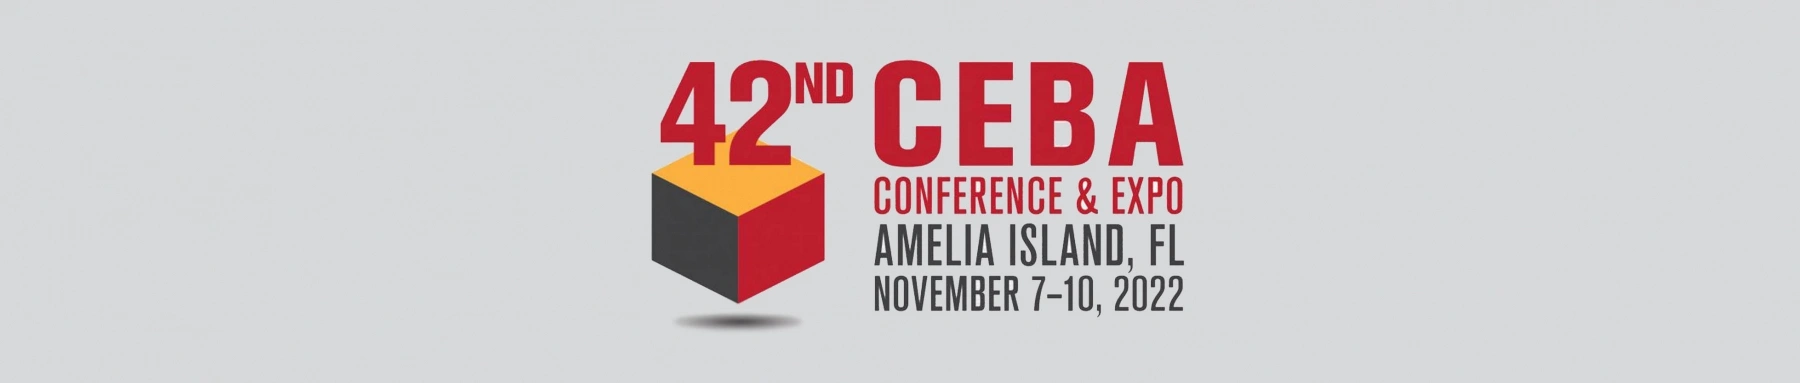 Rytec at the CEBA Conference & EXPO 2022